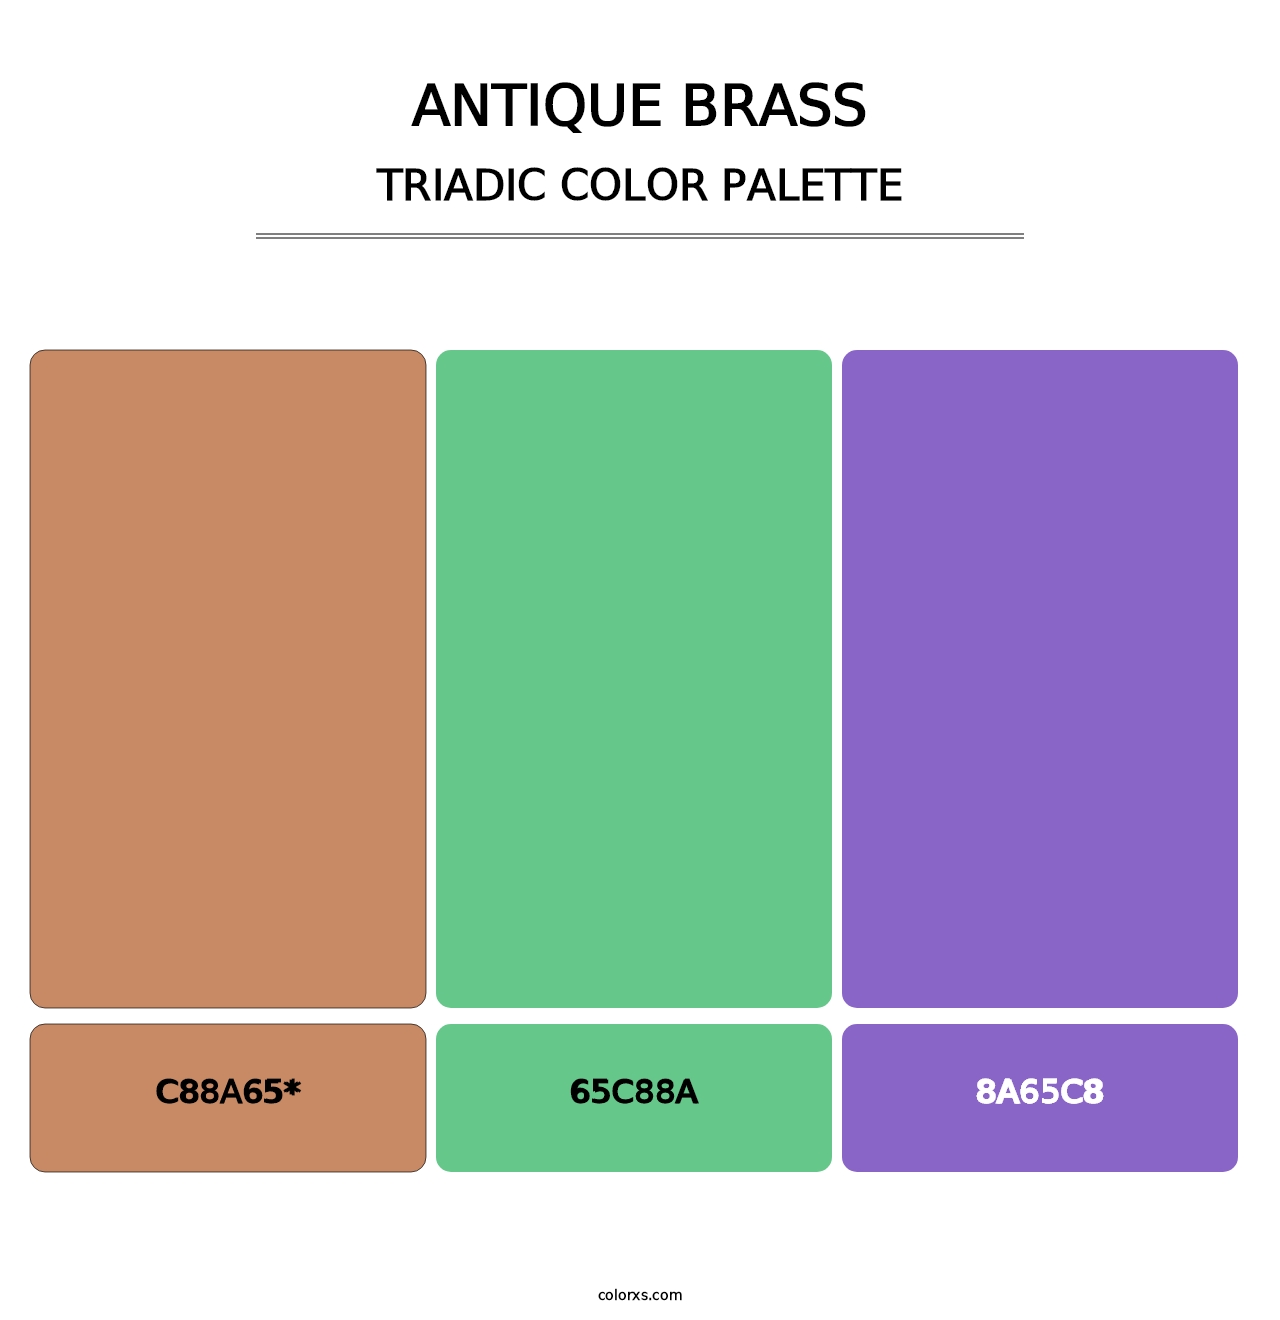 Antique Brass - Triadic Color Palette